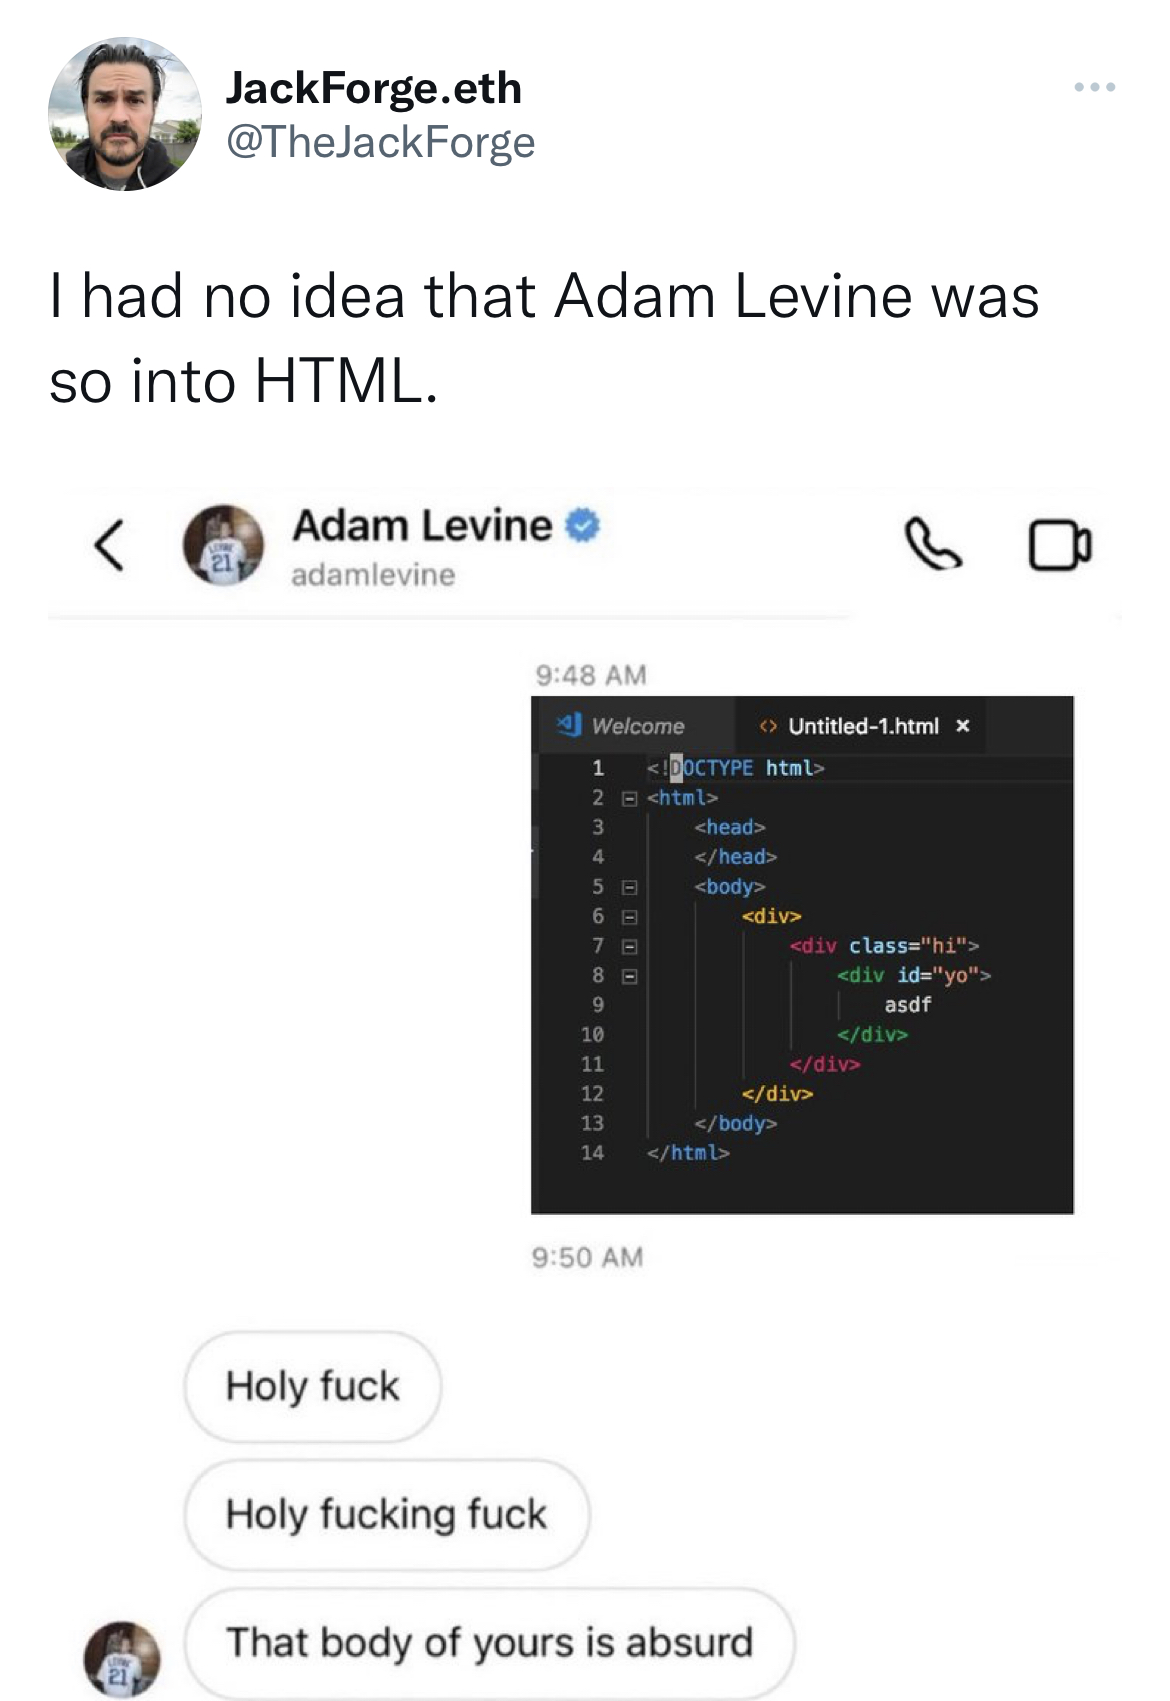 Adam Levine Sexting memes - software - JackForge.eth I had no idea that Adam Levine was so into Html. Adam Levine adamlevine Holy fuck wwcome Se 14 Octype hal  Untitled1.html   id""